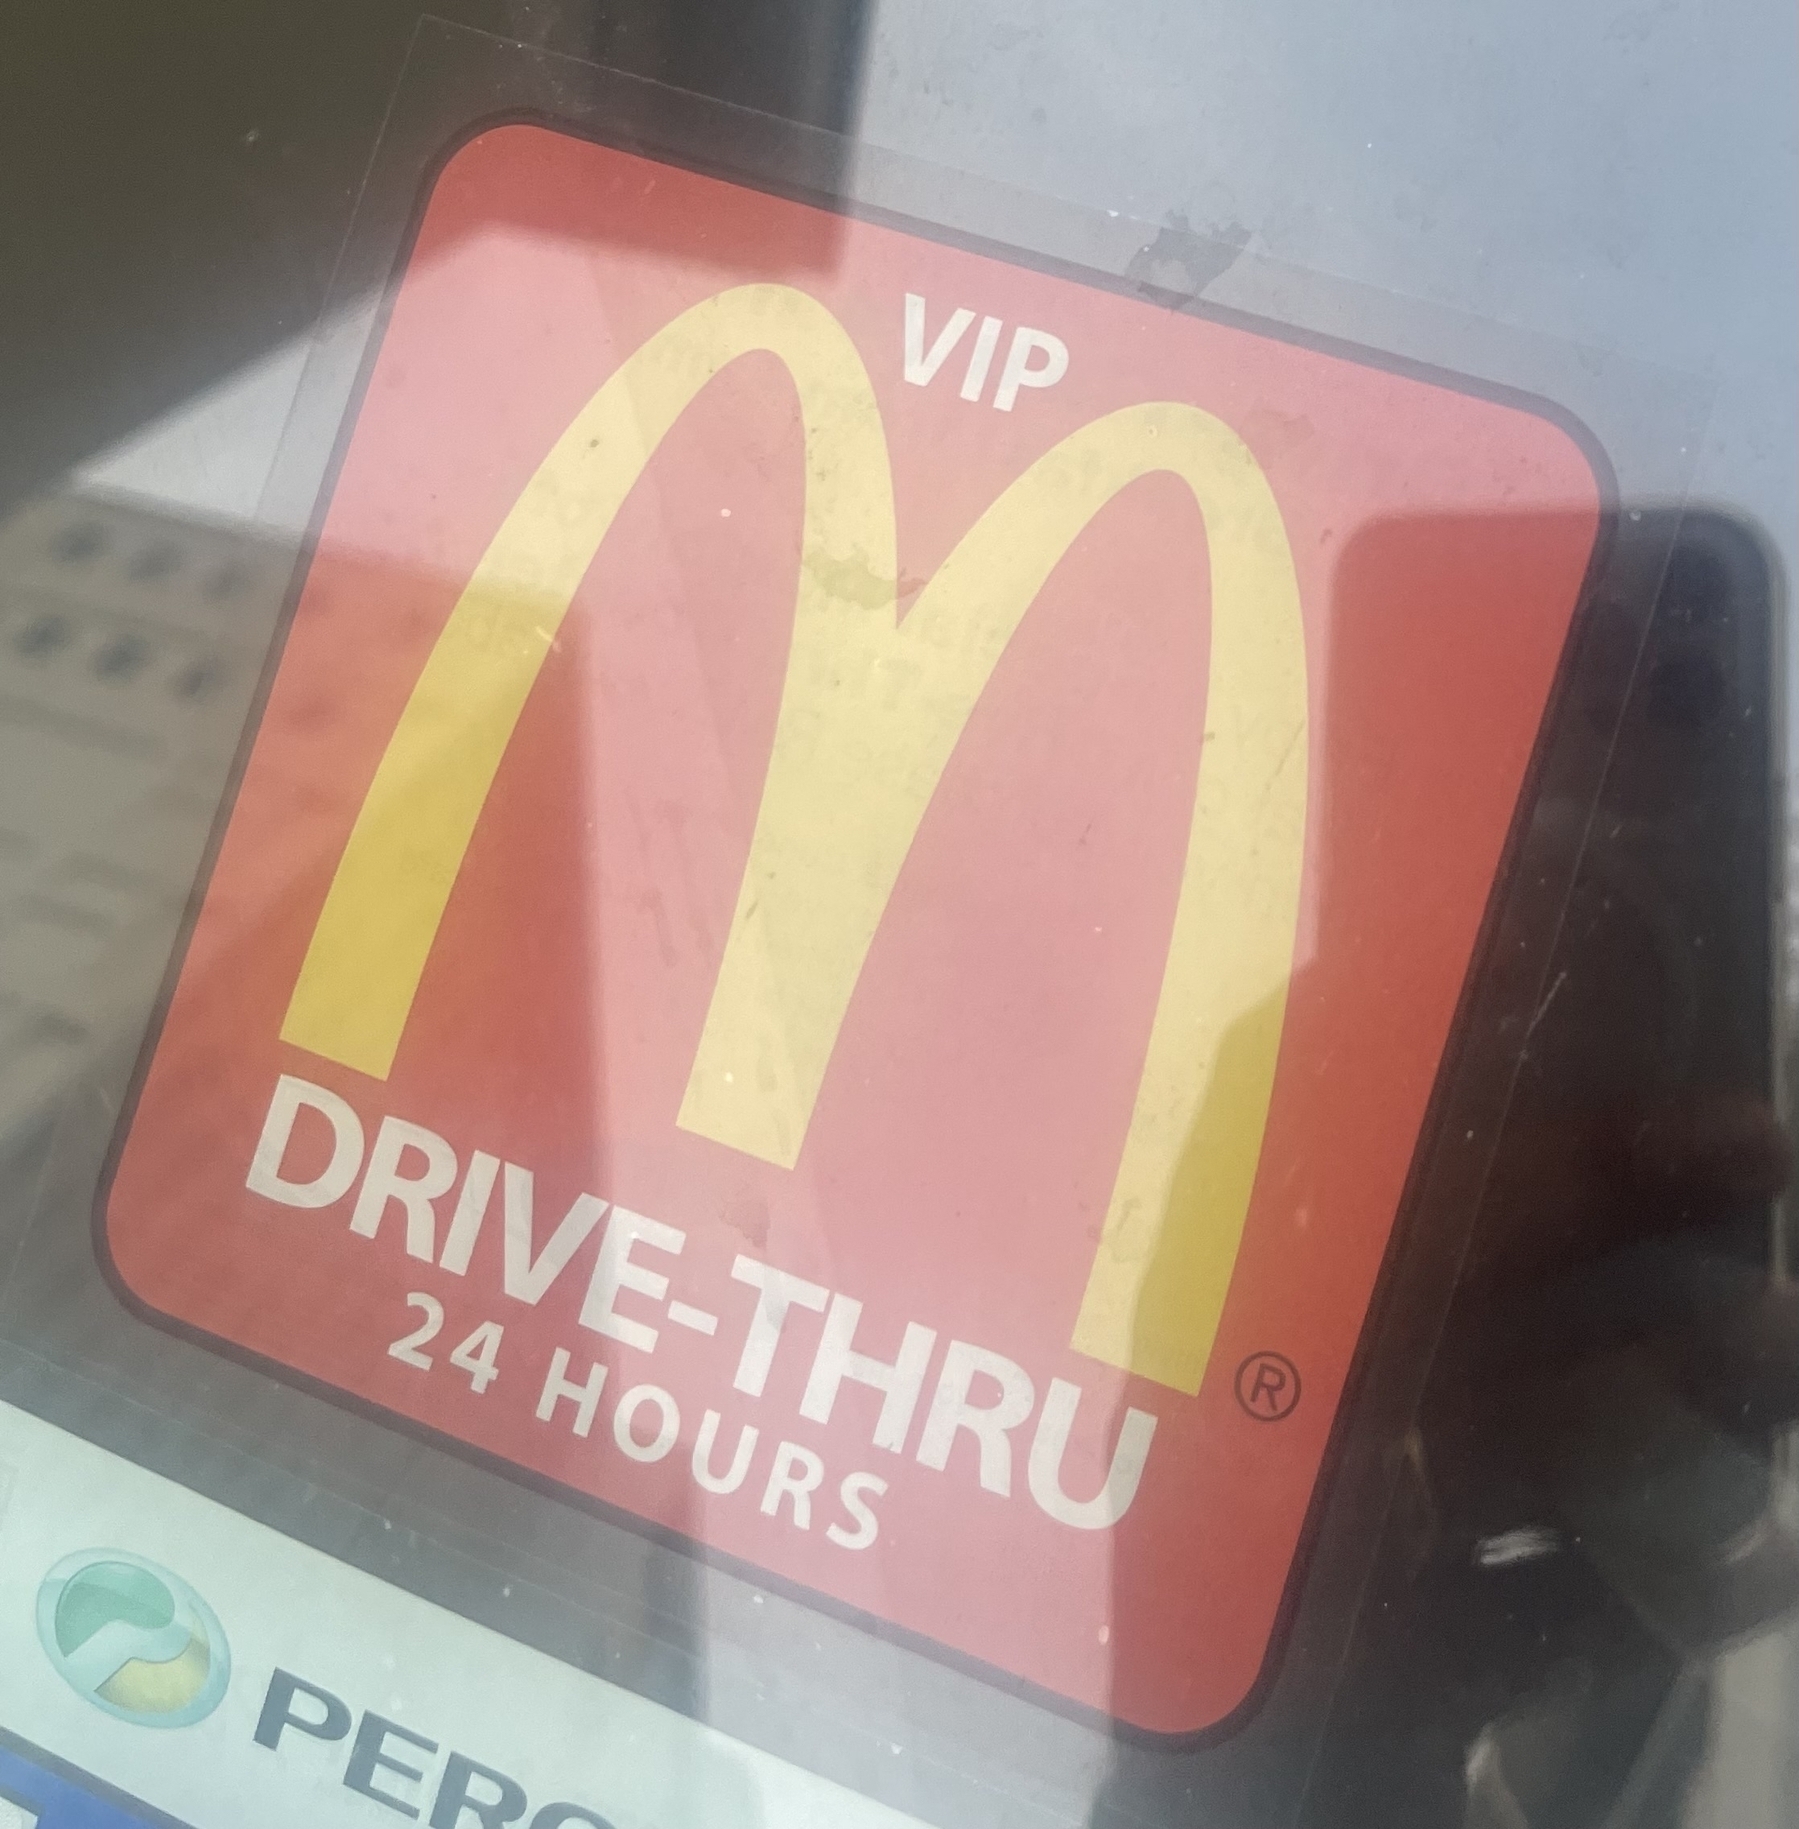 A McDonalds vip car windscreen sticker 